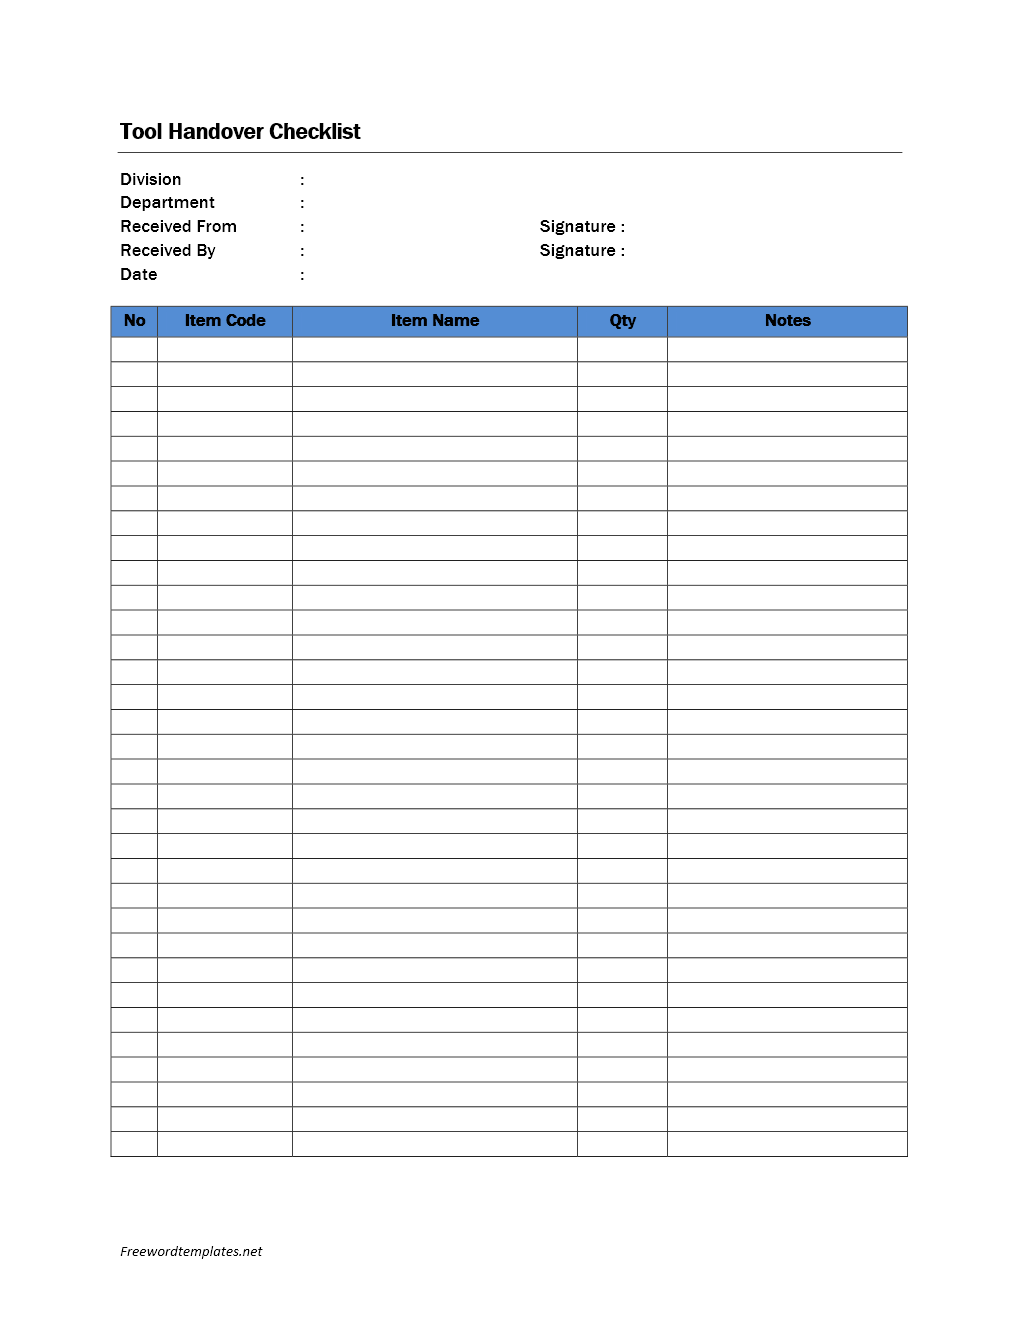 Checklist Template For Tools Tool Handover Checklist Template